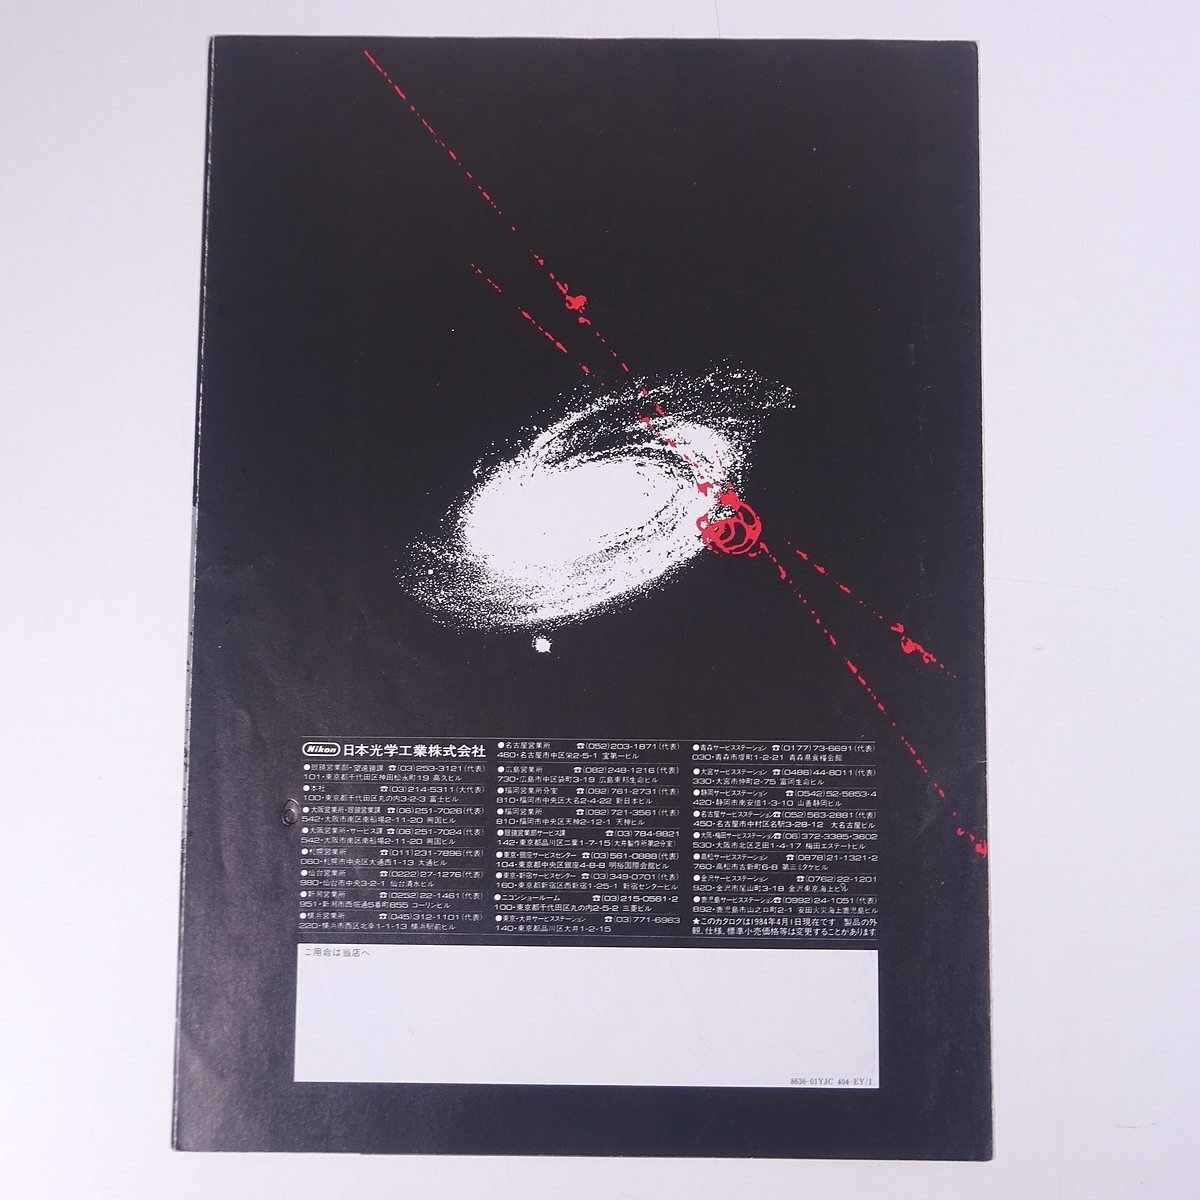 Nikon ニコン 6.5cmED屈折赤道儀 日本光学工業株式会社 1984 小冊子 カタログ パンフレット 天体望遠鏡 天体観測の画像2